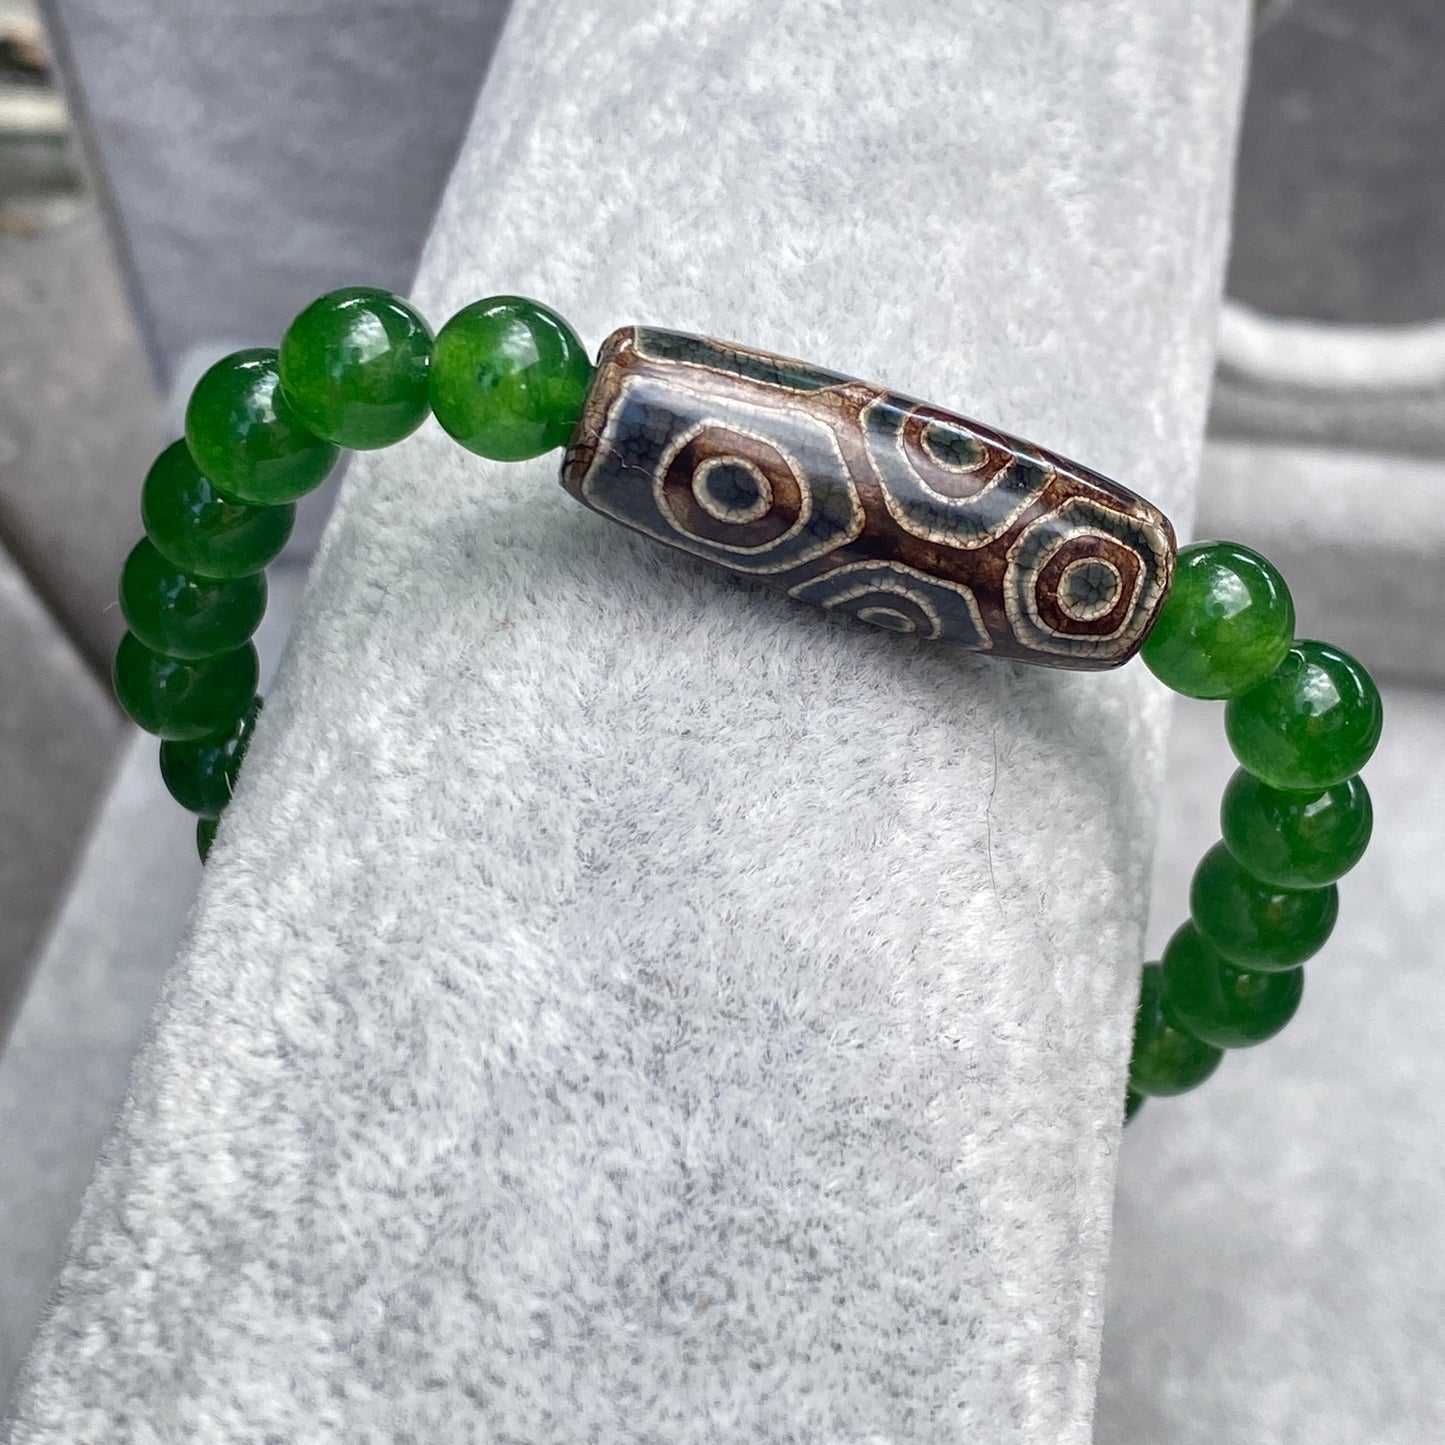 Jade and Tibetan Agate Bracelet